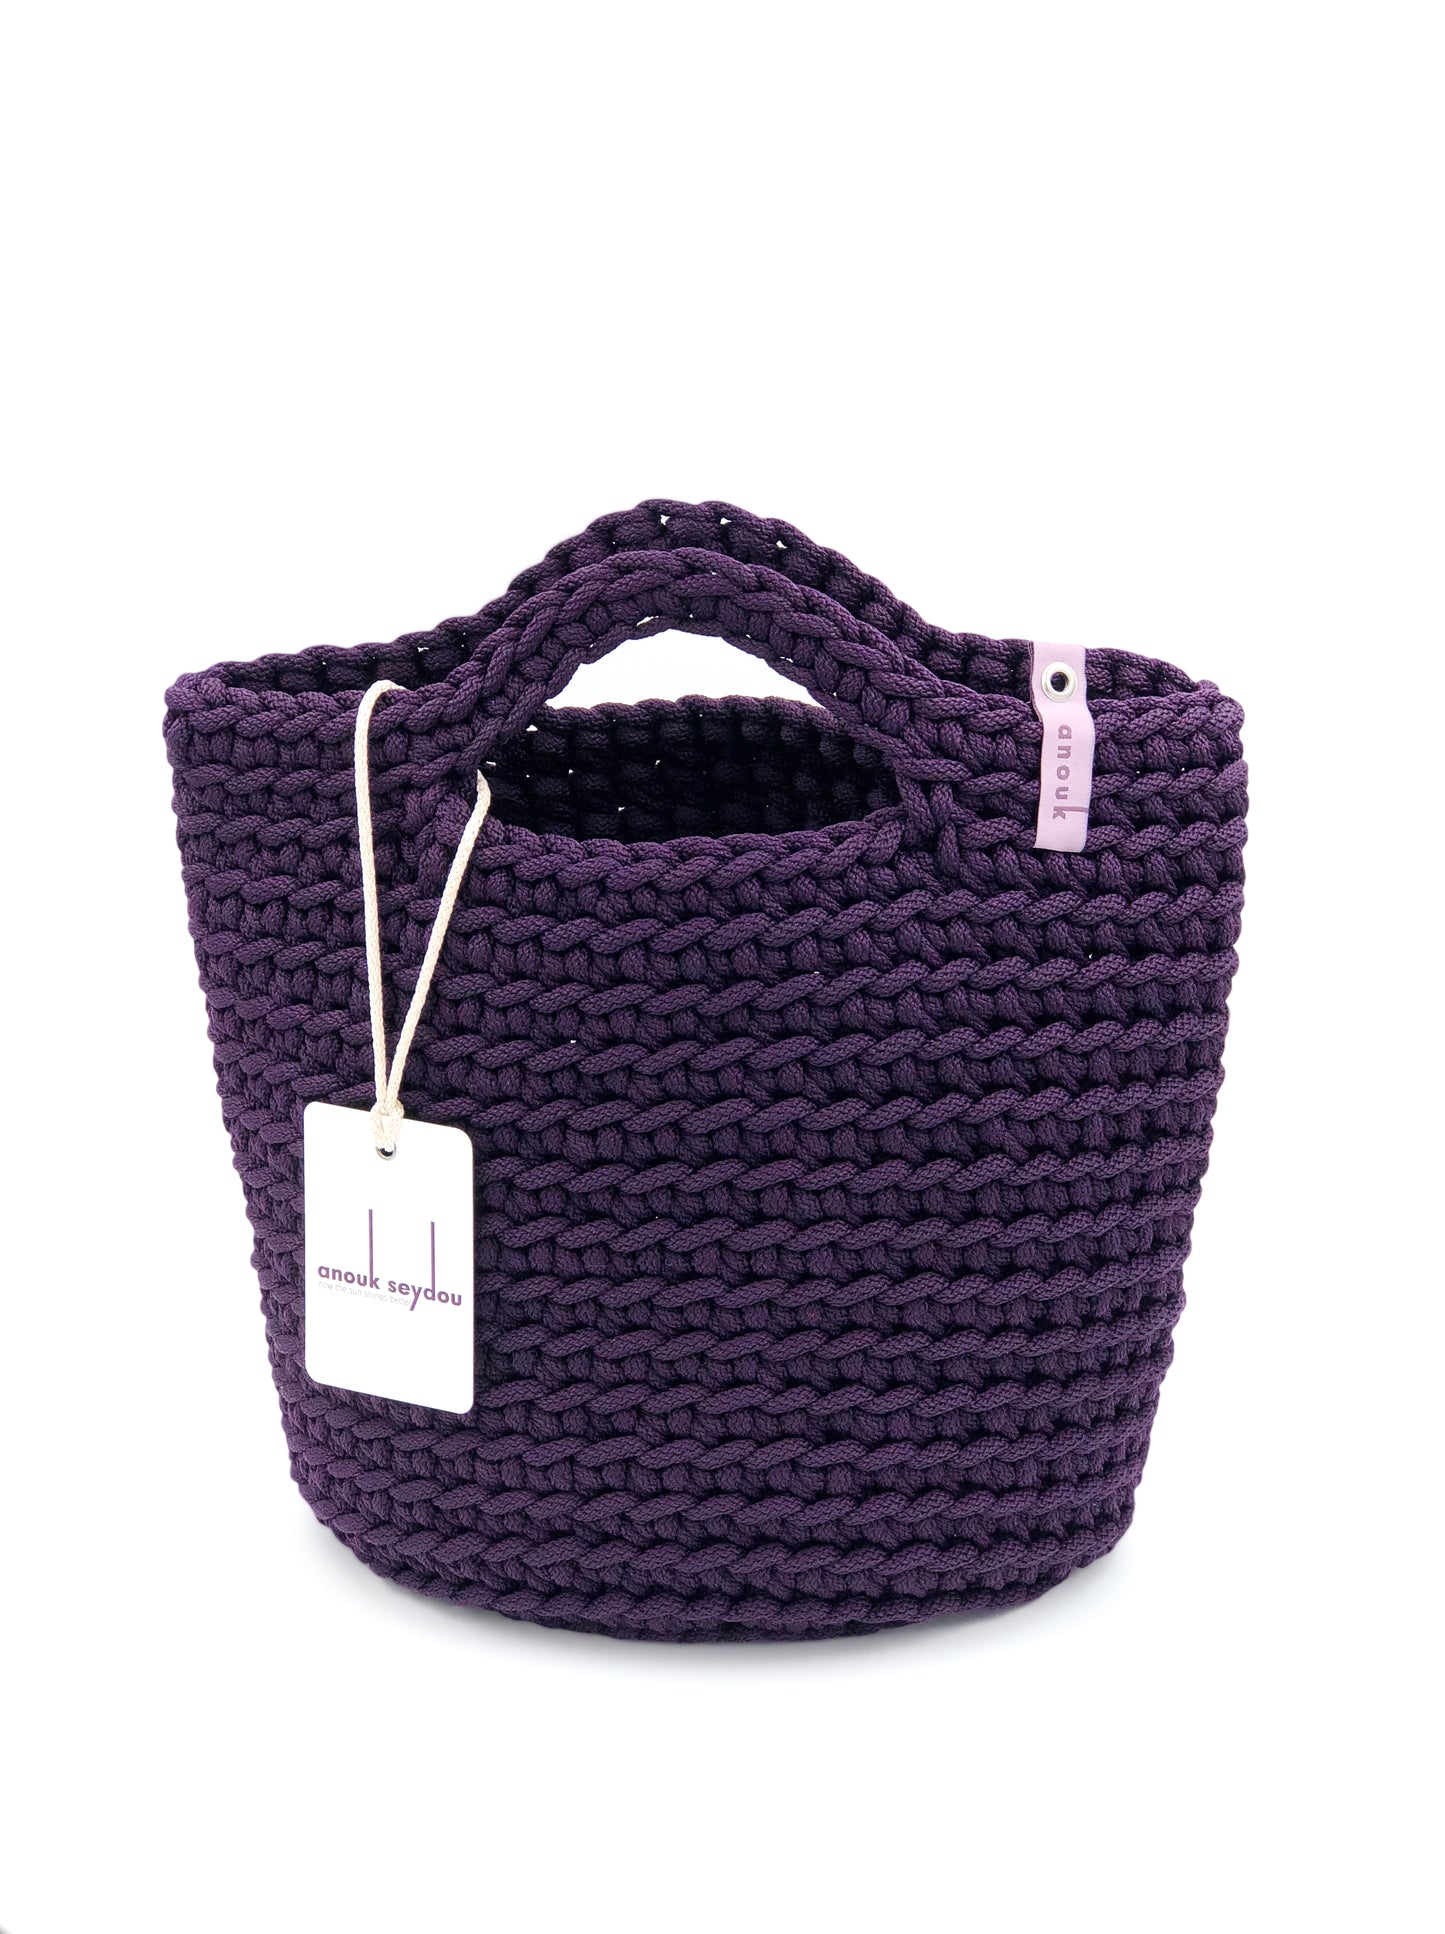 Scandinavian Style Handmade Crochet Tote Bag with Short Handles